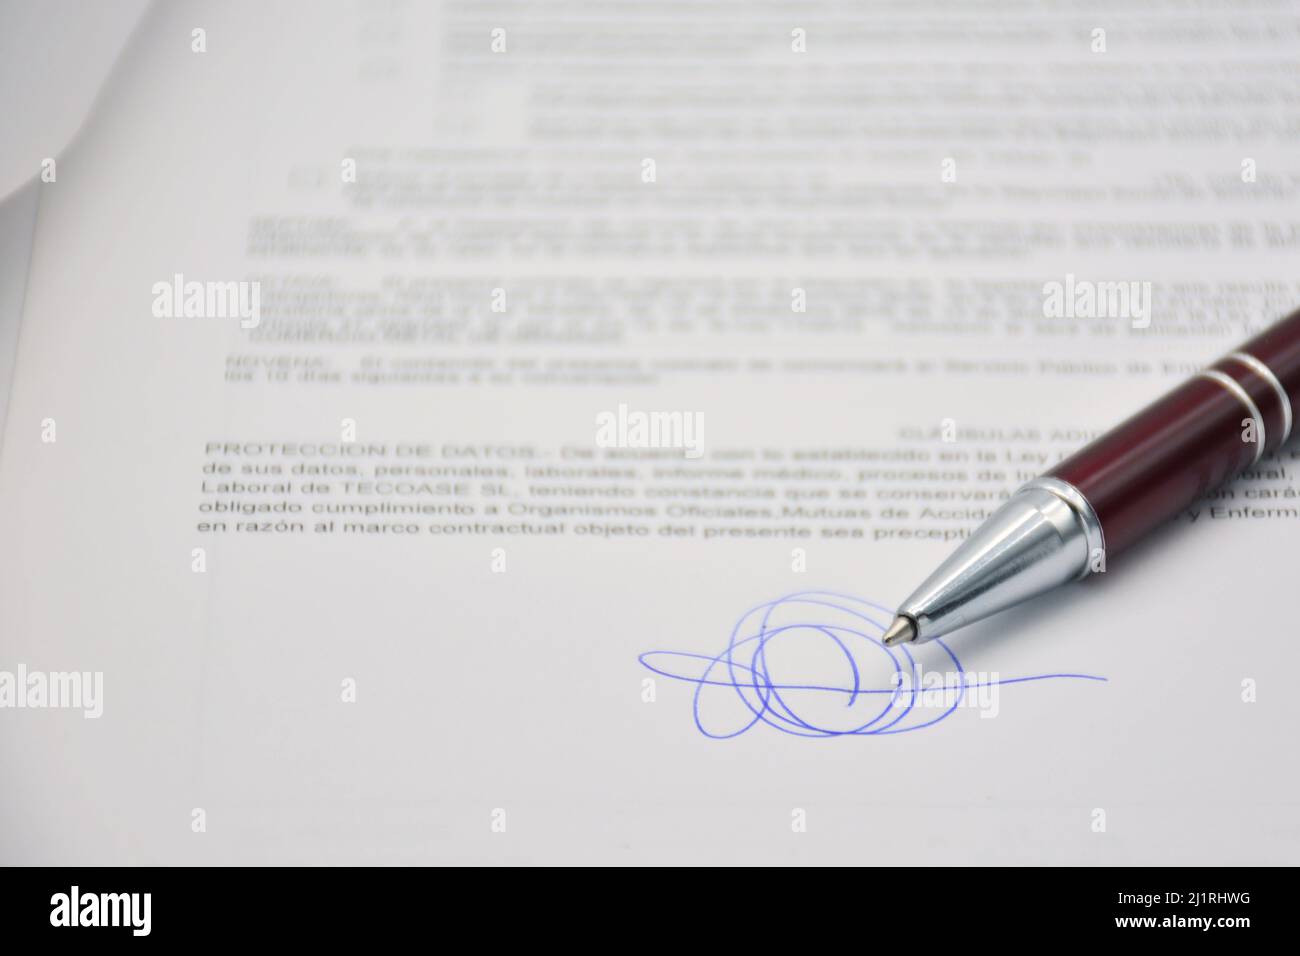 Documento firmado con un bolígrafo, contrato Stock Photo